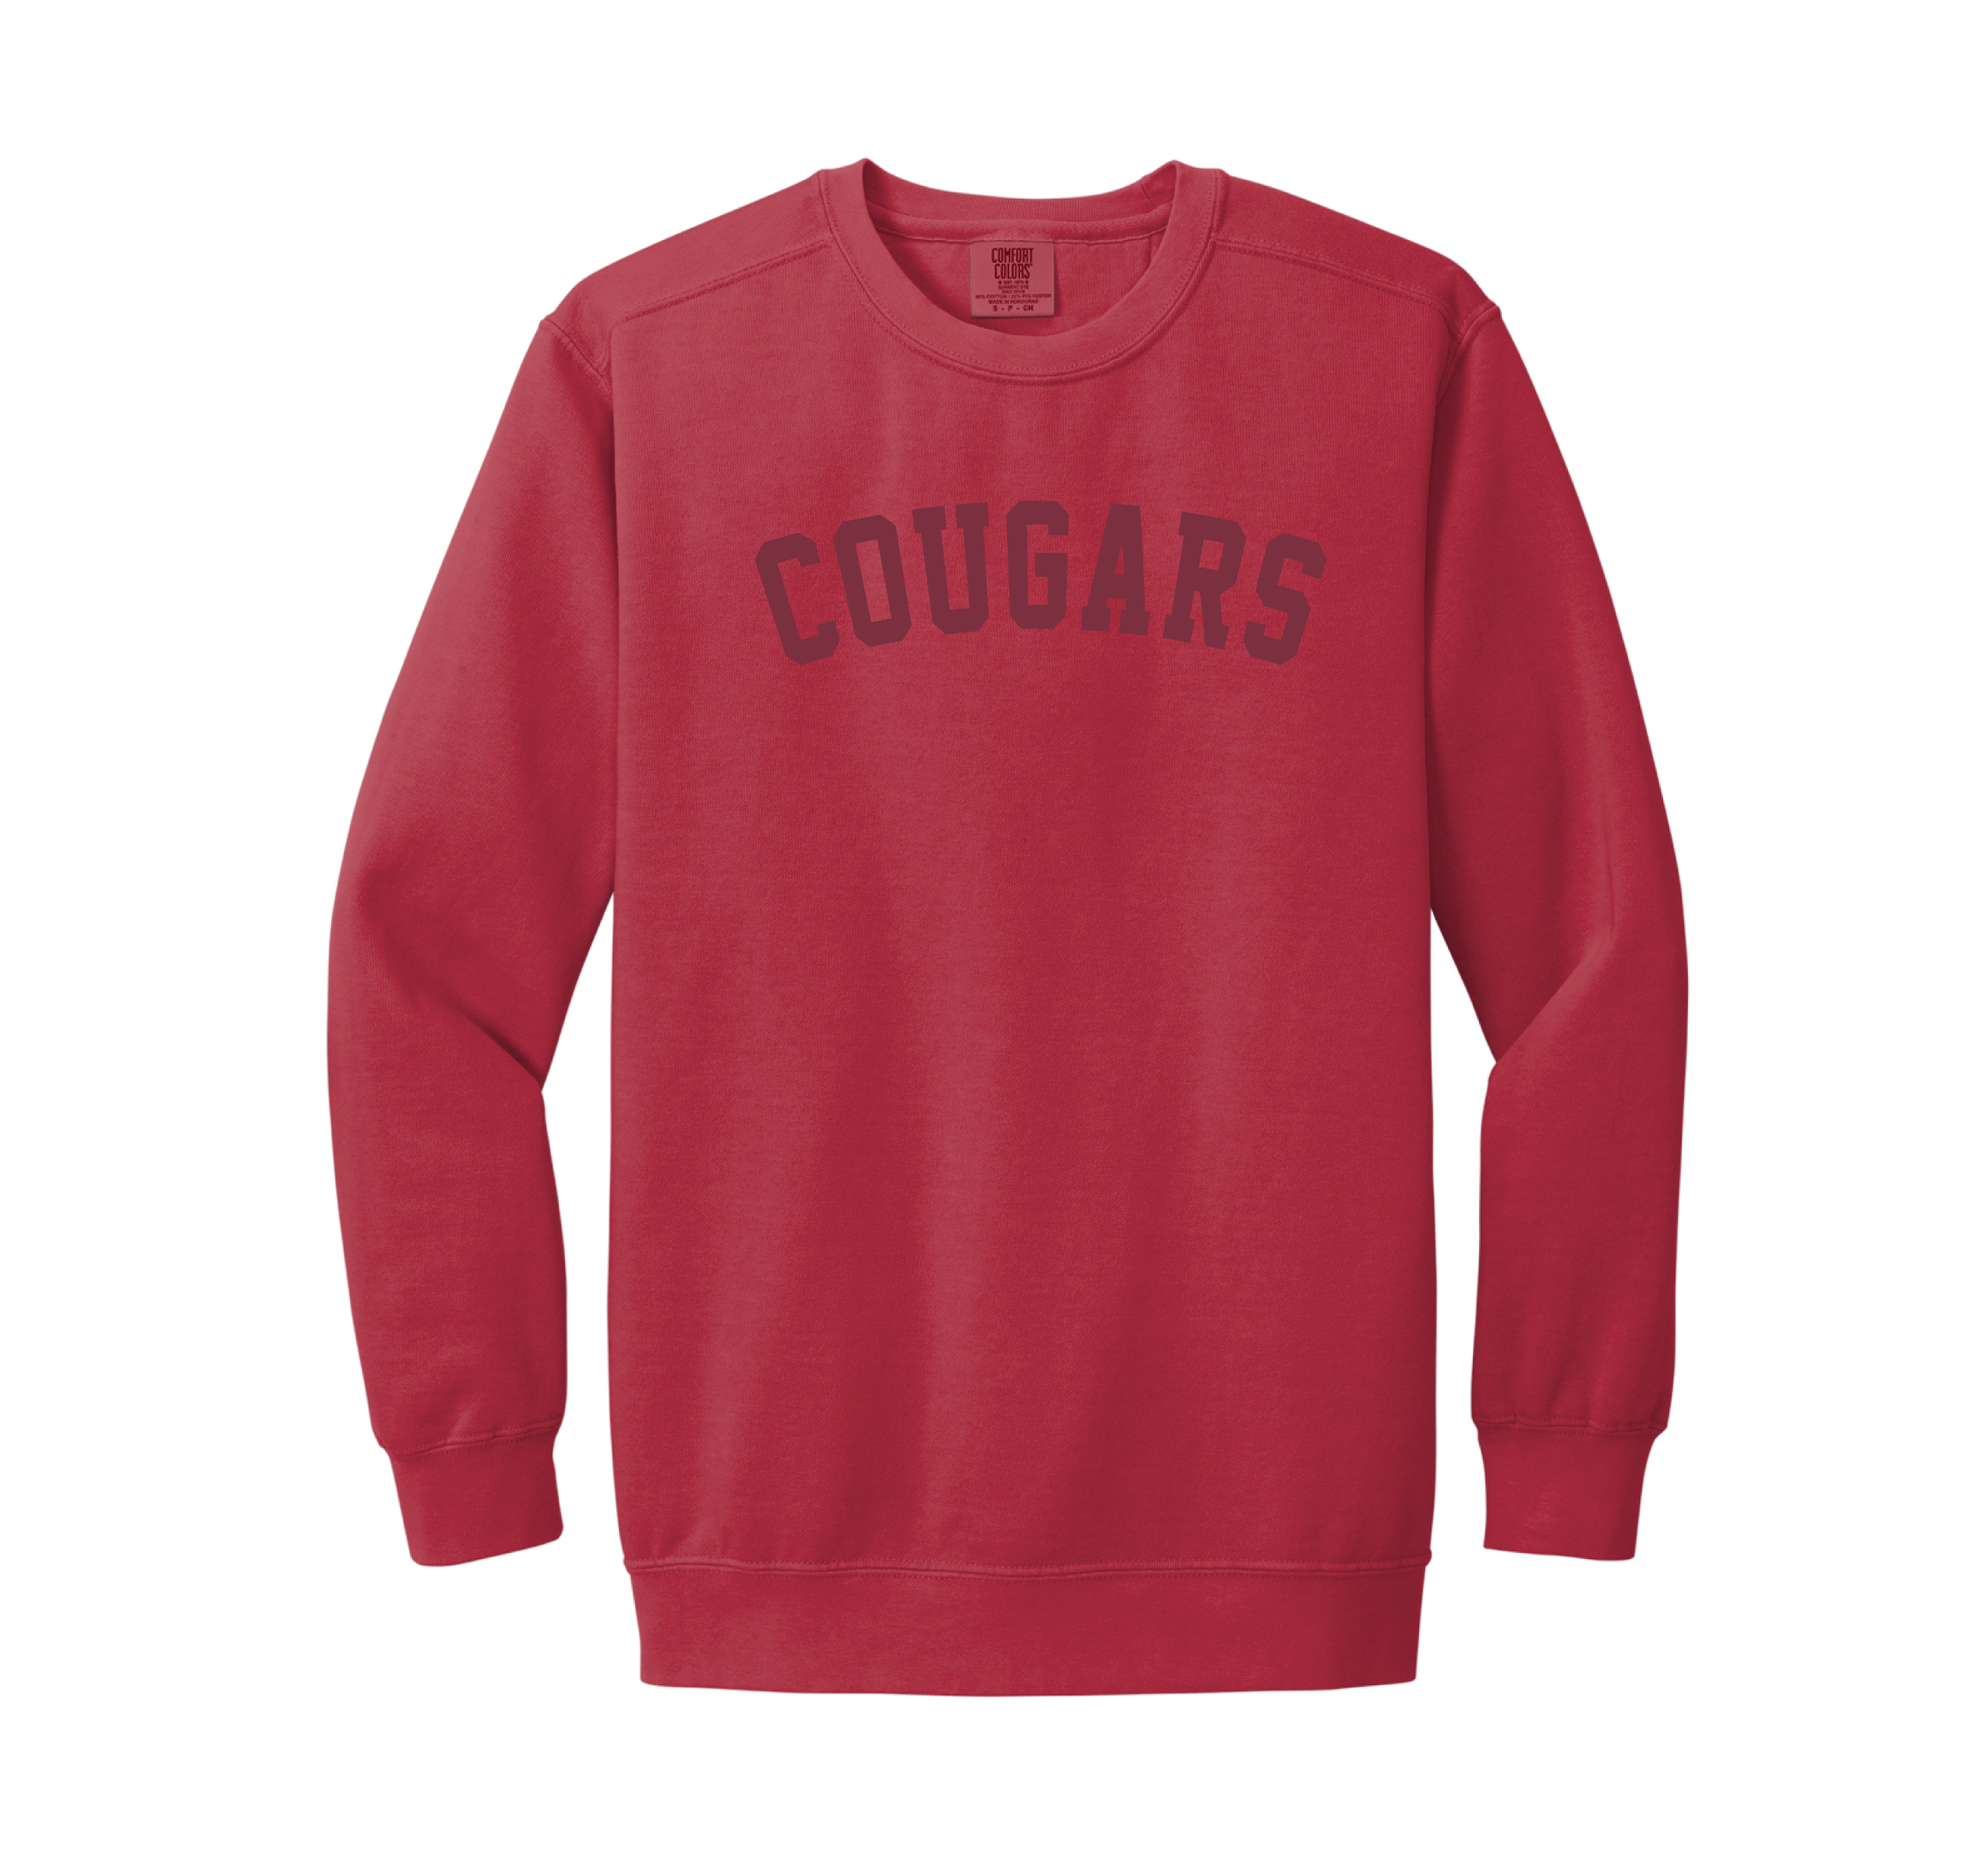 Cougars Crimson Puff Sweatshirt